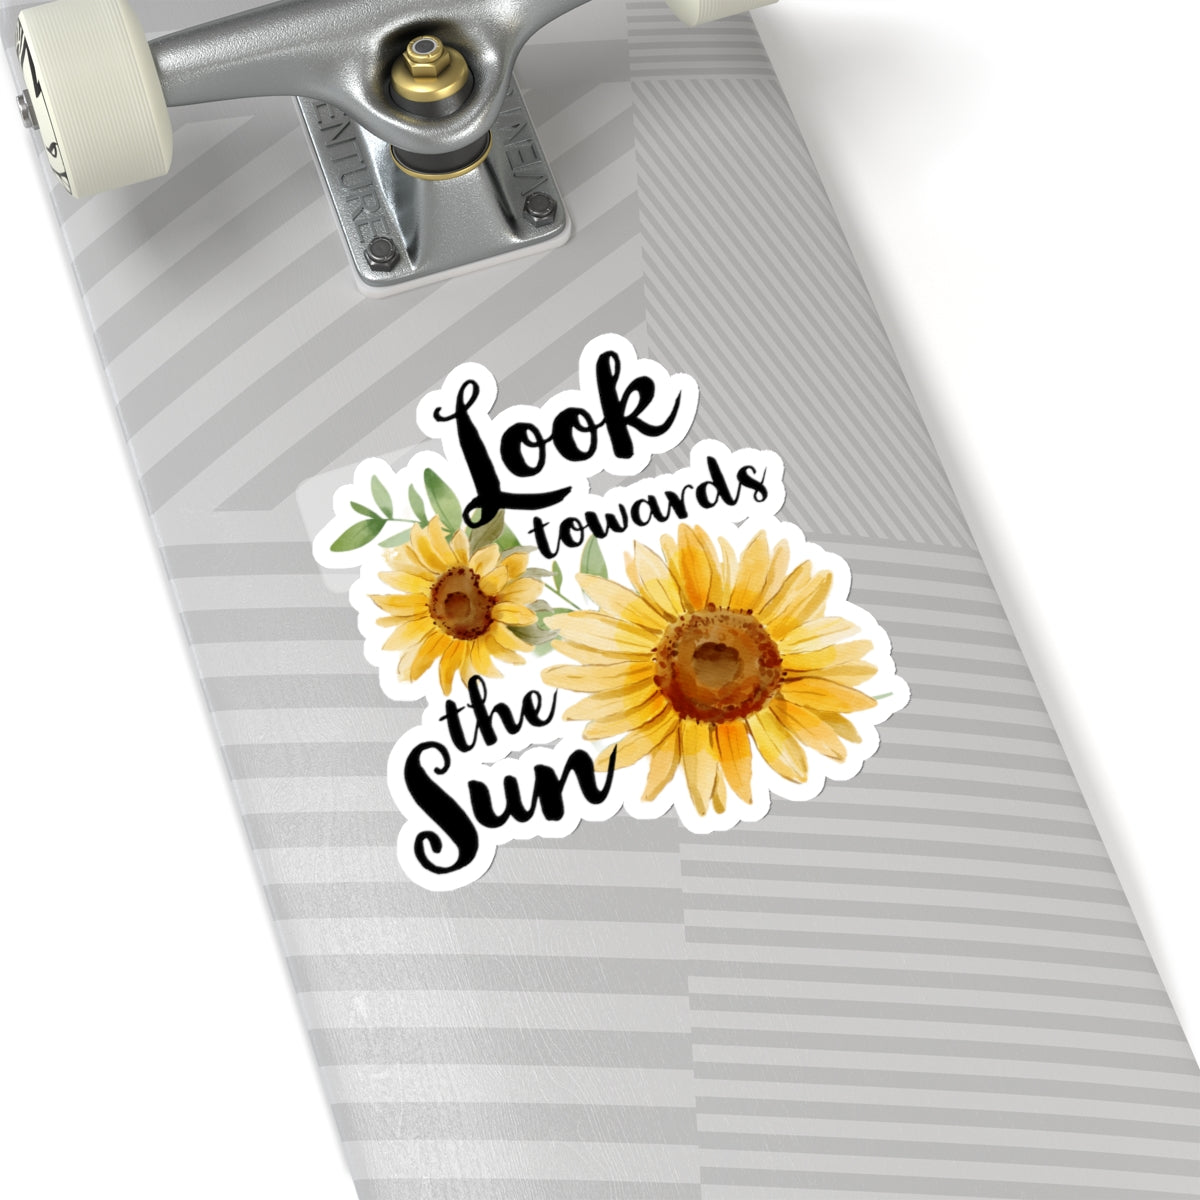 Look Towards the Sun(flower) Stickers